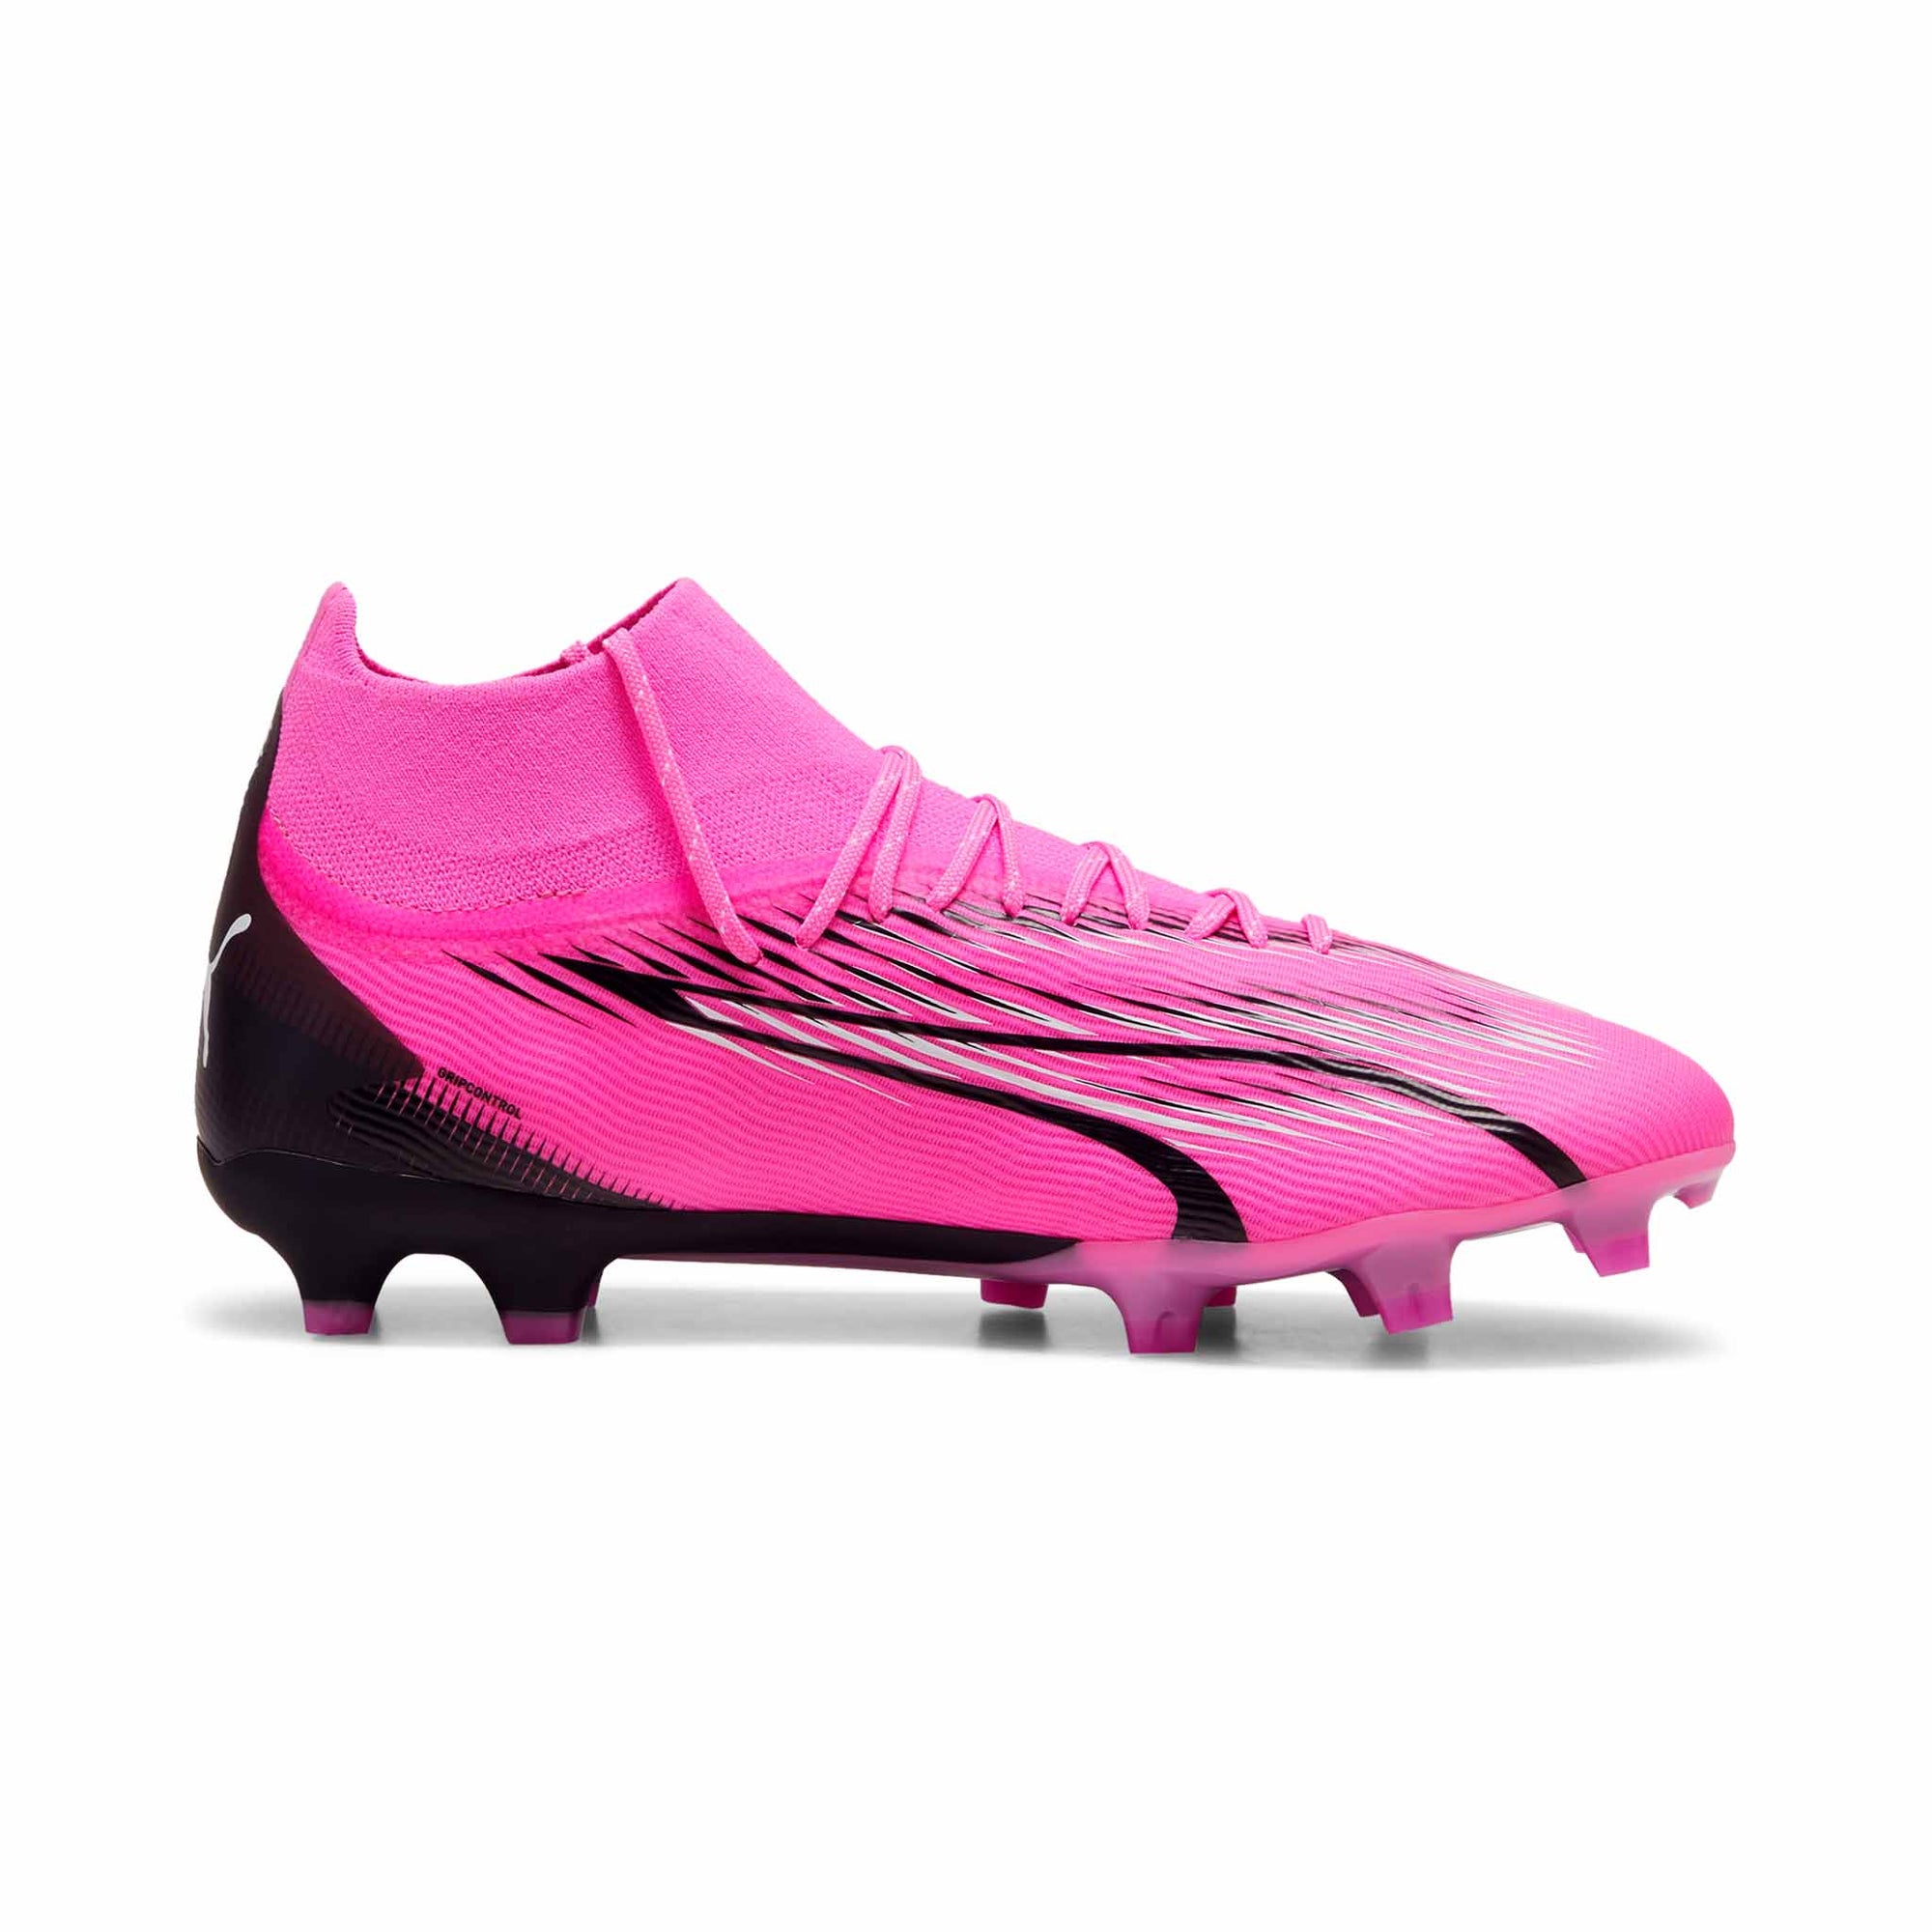 Puma Ultra Pro FG/AG chaussures de soccer a crampons adultes - Poison Pink / Puma White / Puma Black